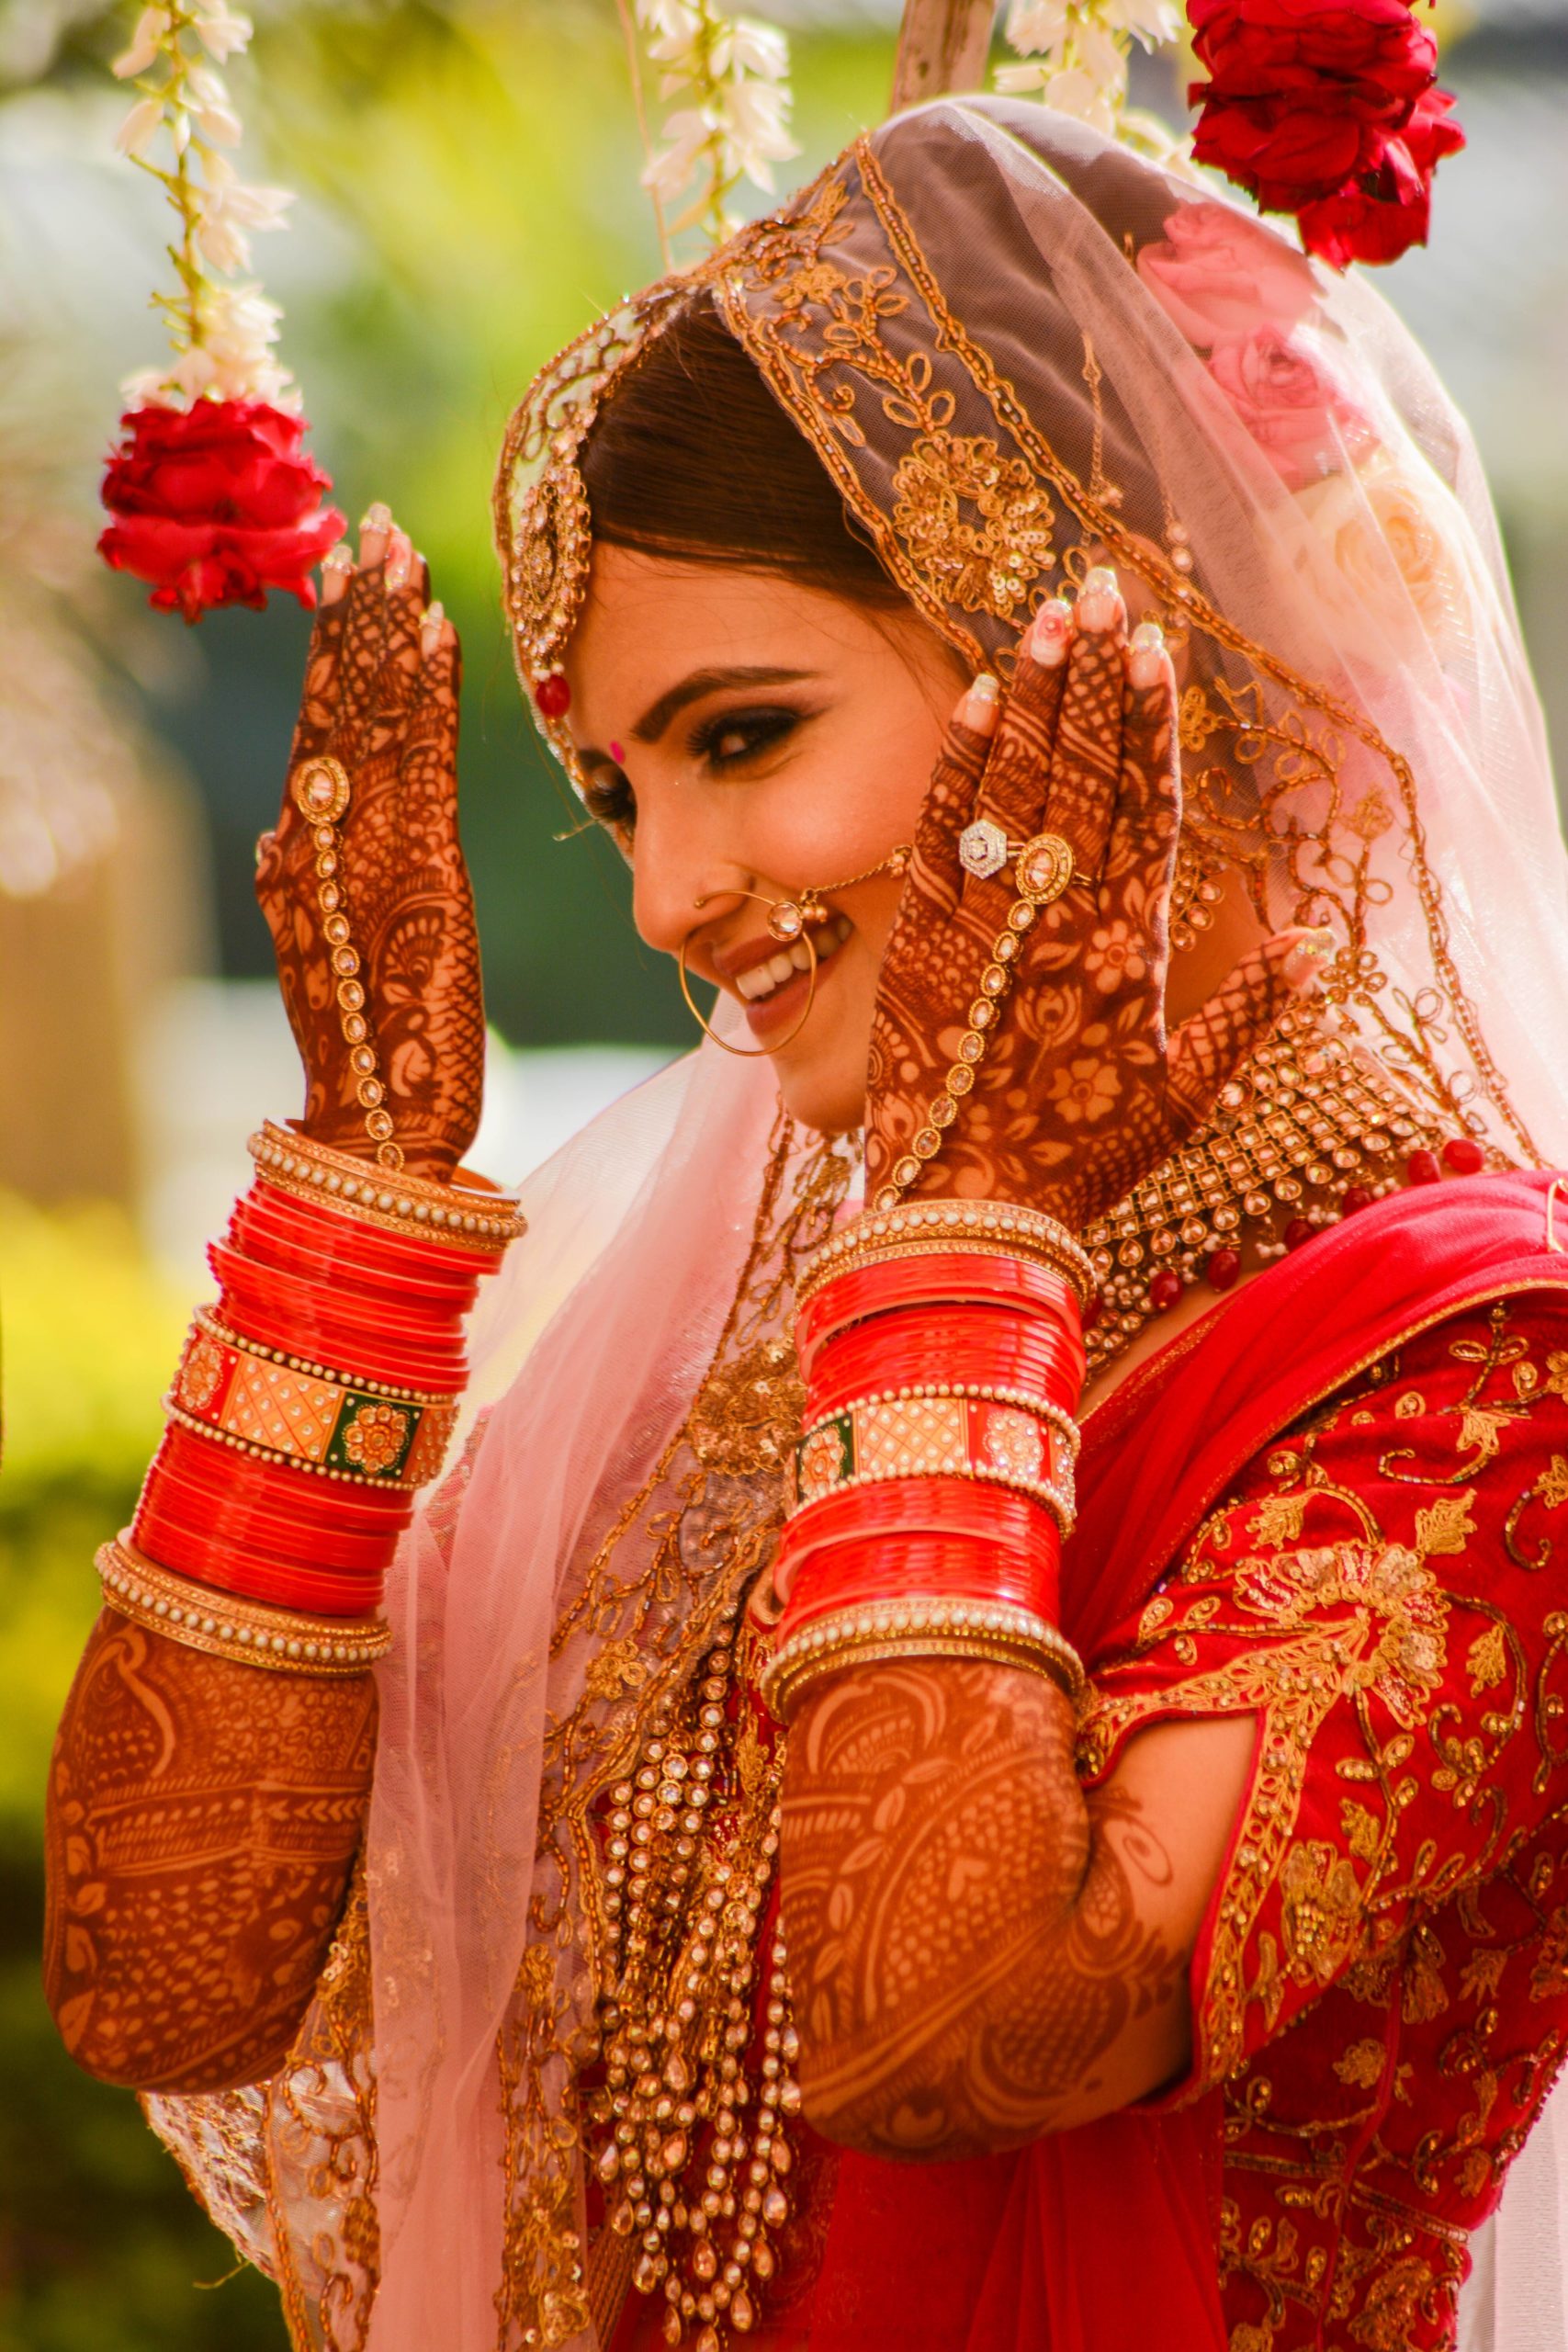 Brides, biryani and marriage multiplexes: Pakistan's wedding season heats  up in cool weather - The San Diego Union-Tribune